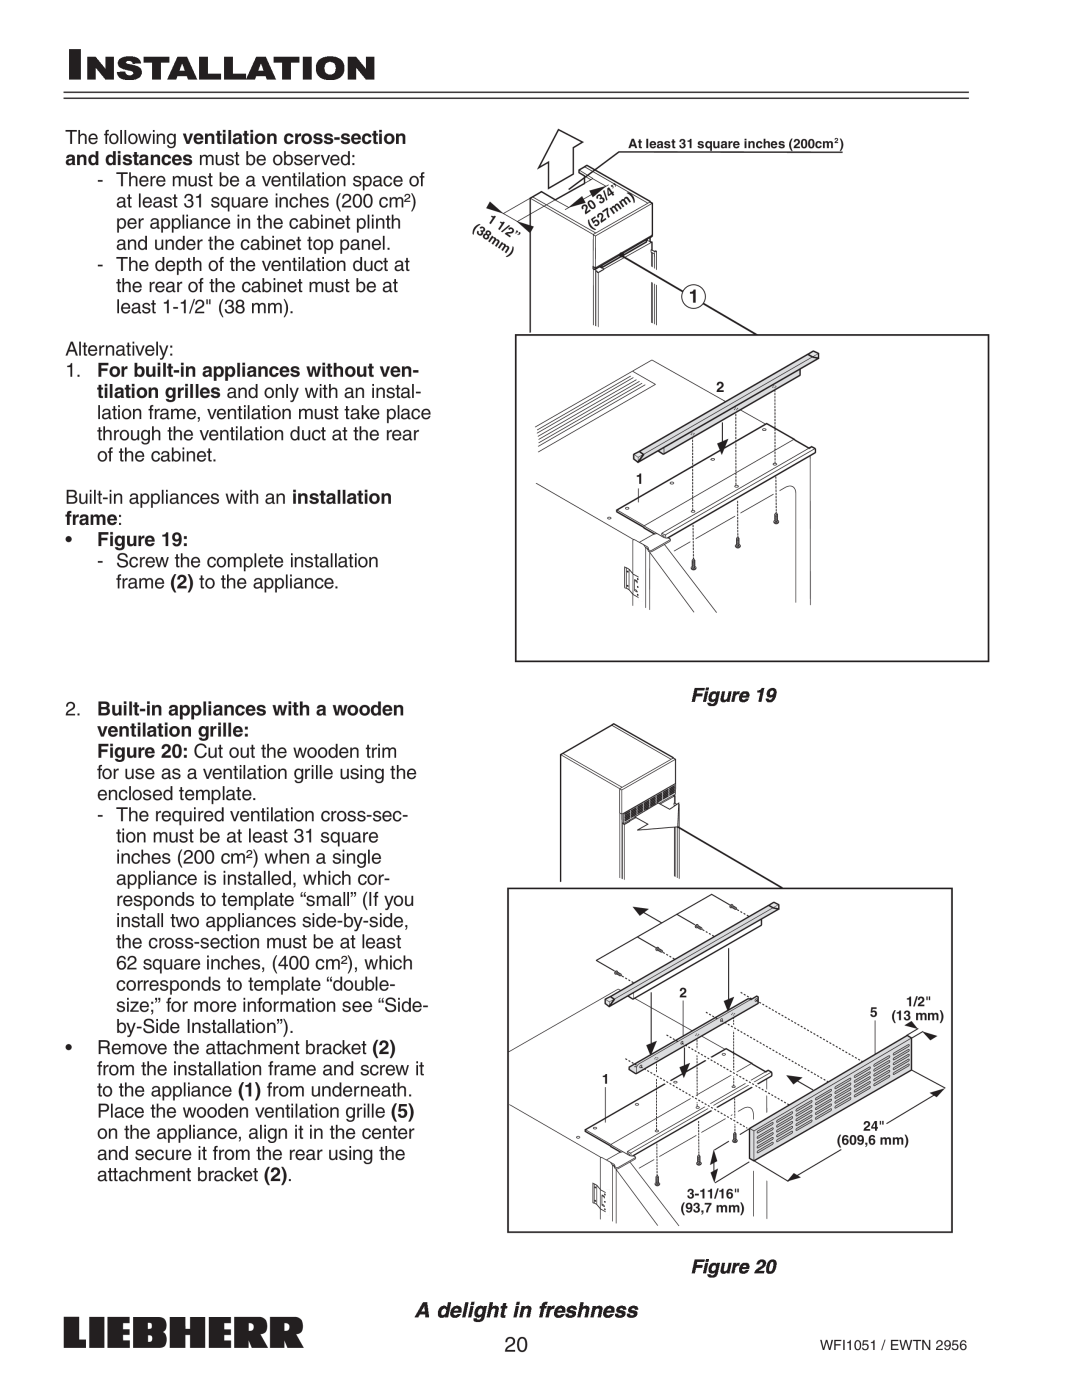 Liebherr EWTN installation instructions Installation, A delight in freshness, The following ventilation cross-section 